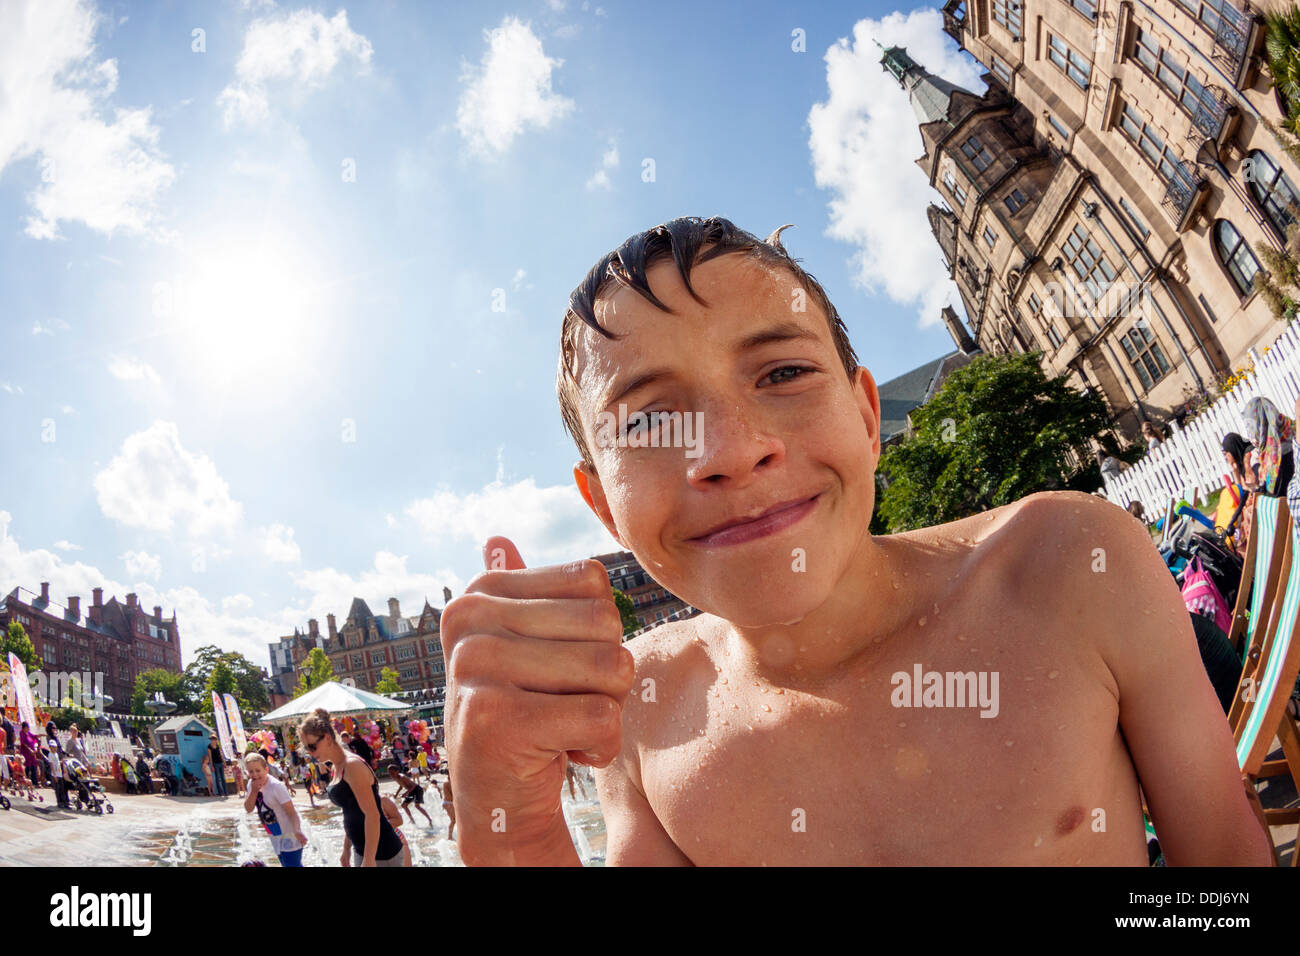 Teenager enjoying water fun Stock Photo